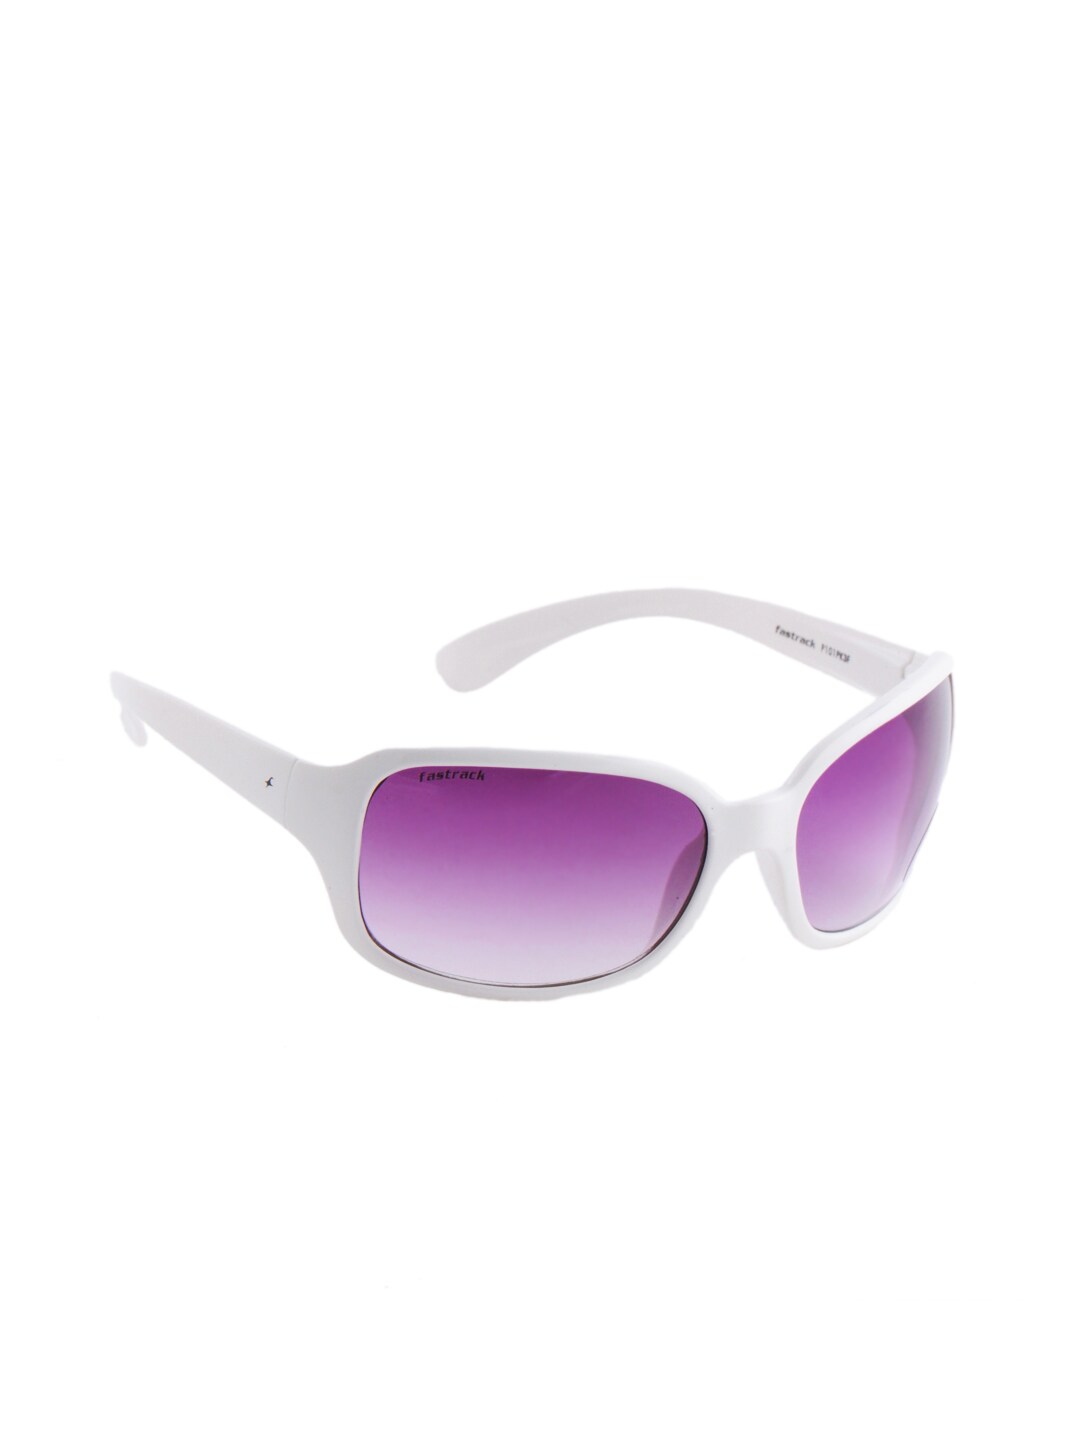 Fastrack Women White Sunglasses